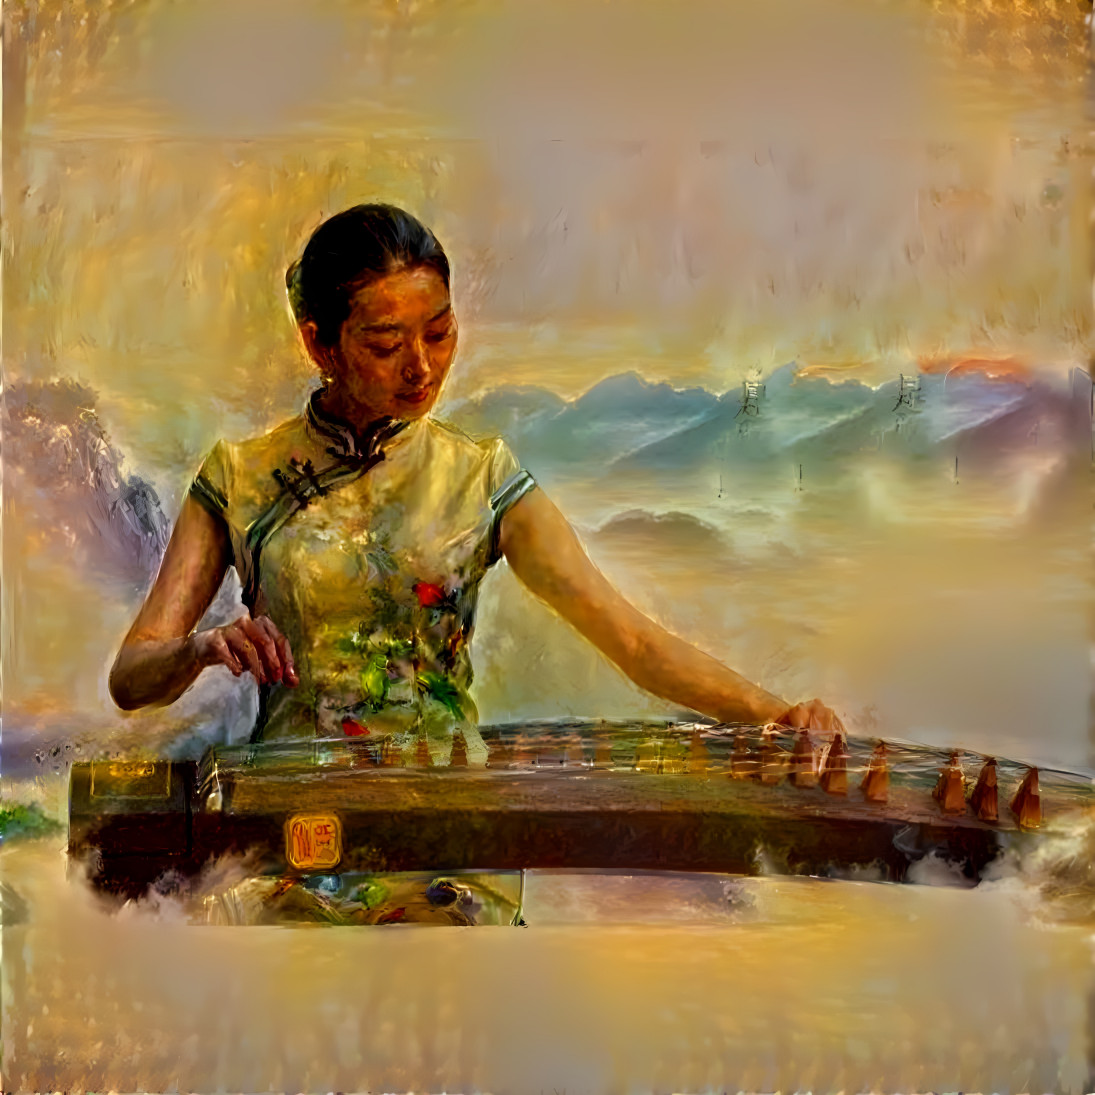 Chinese guzheng - traditional zither